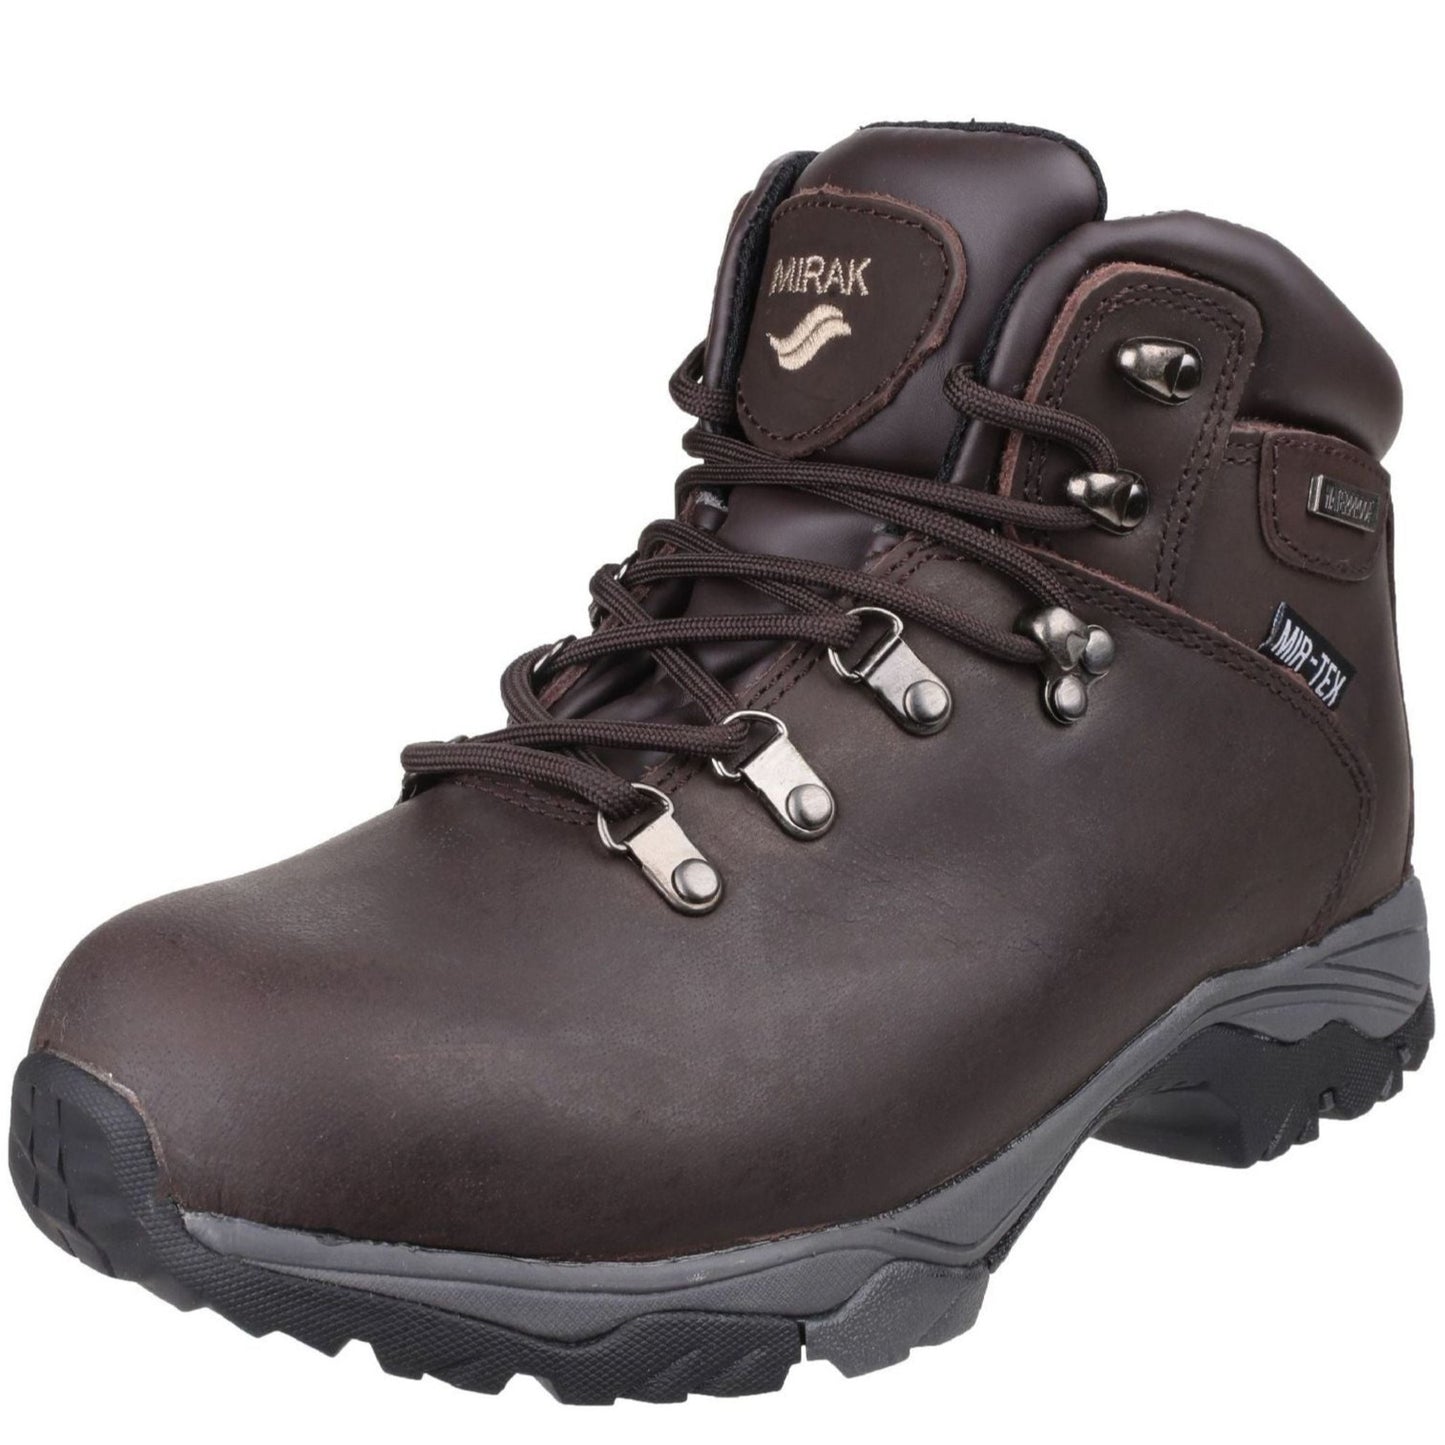 Nebraska Waterproof Hiking Boots